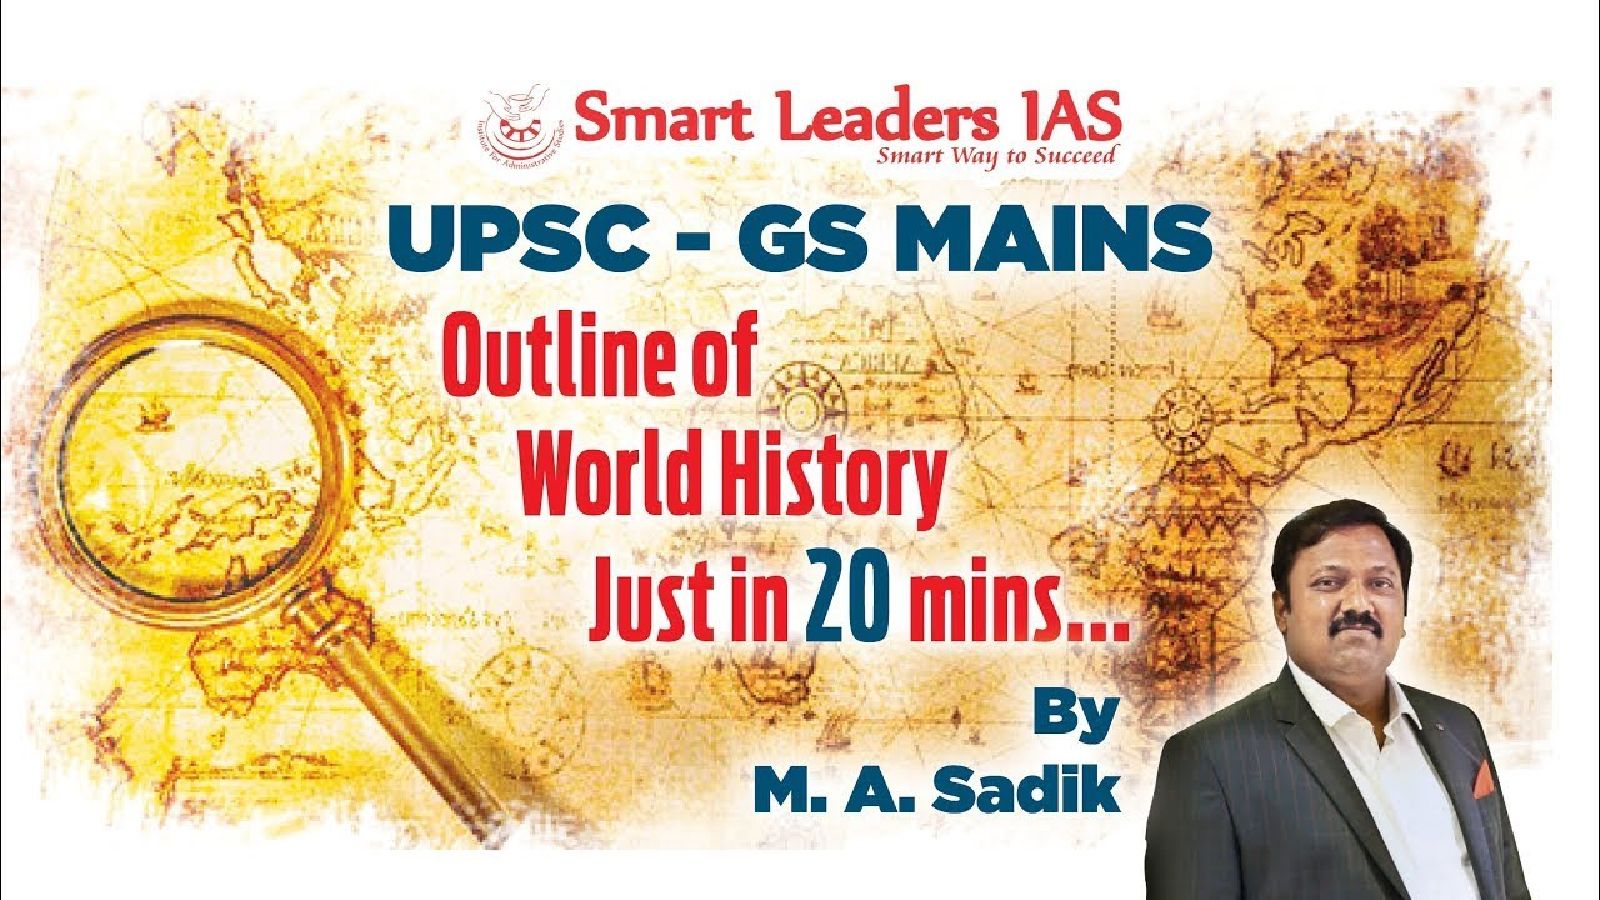 Smart Leaders IAS Academy Chennai Hero Slider - 2